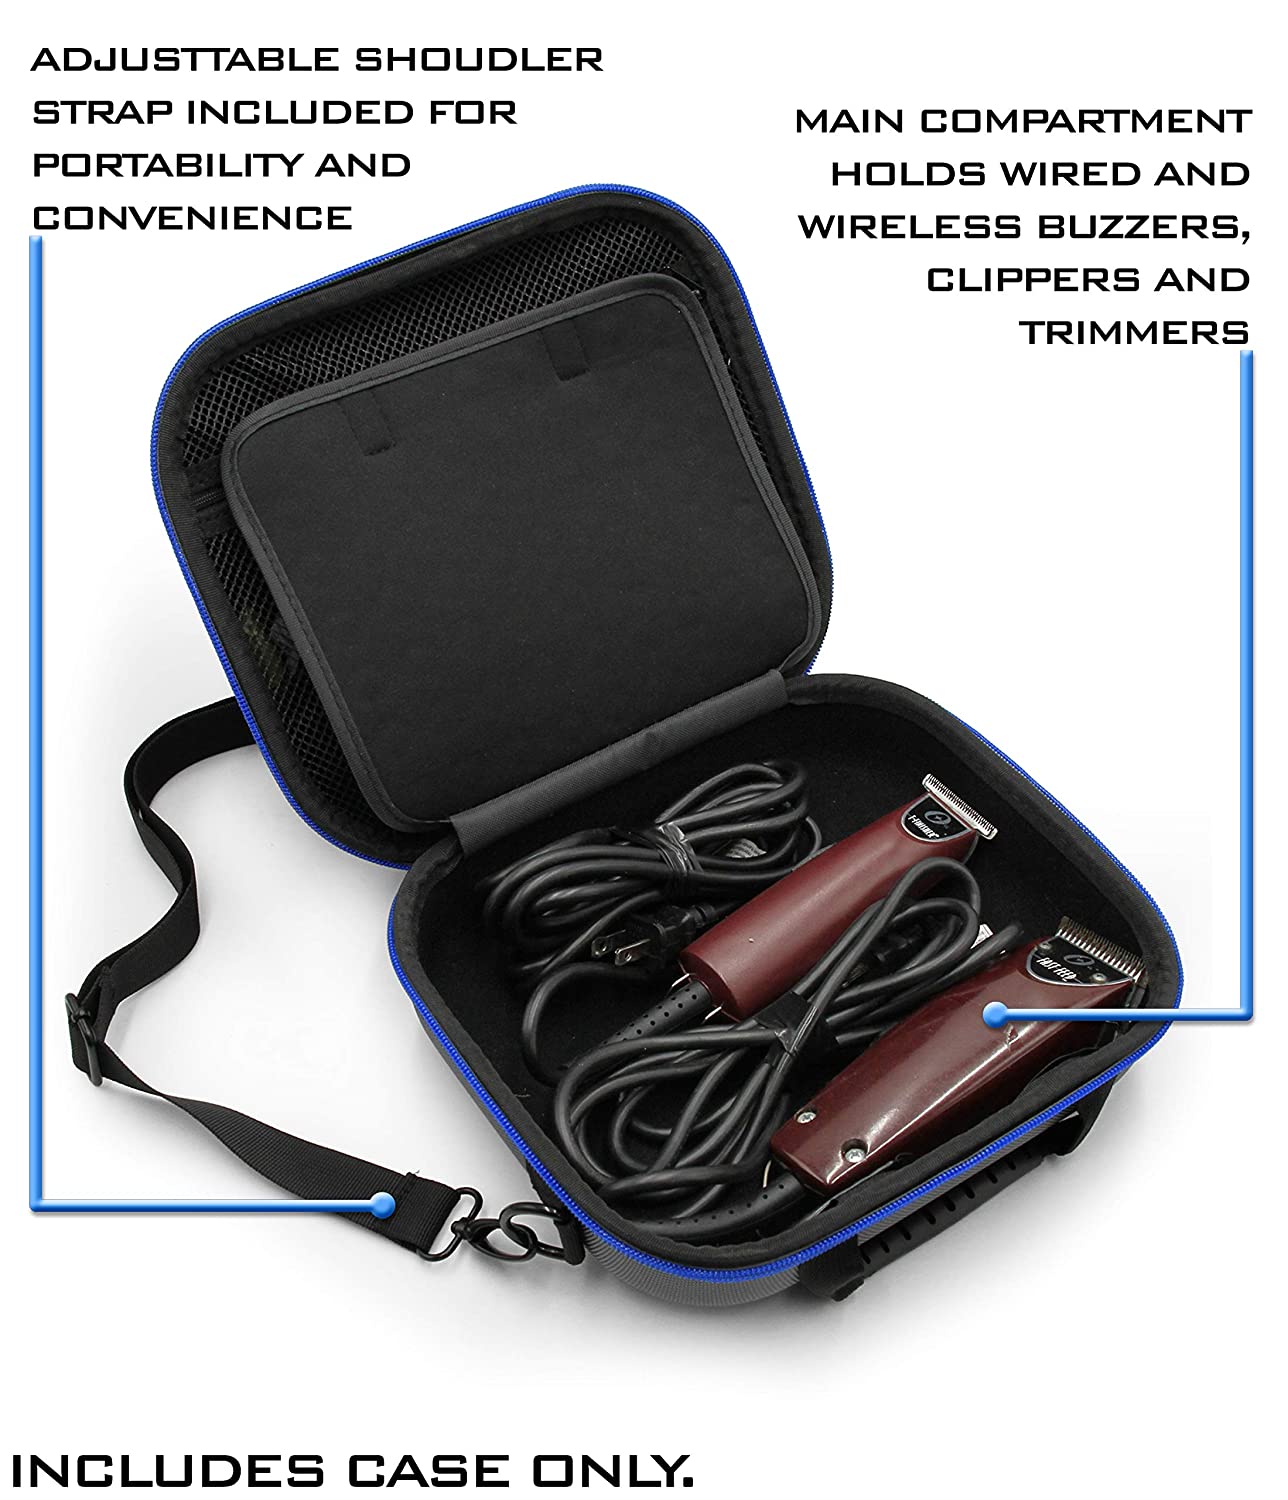 Carrying Case for Wireless ET-5050 Model